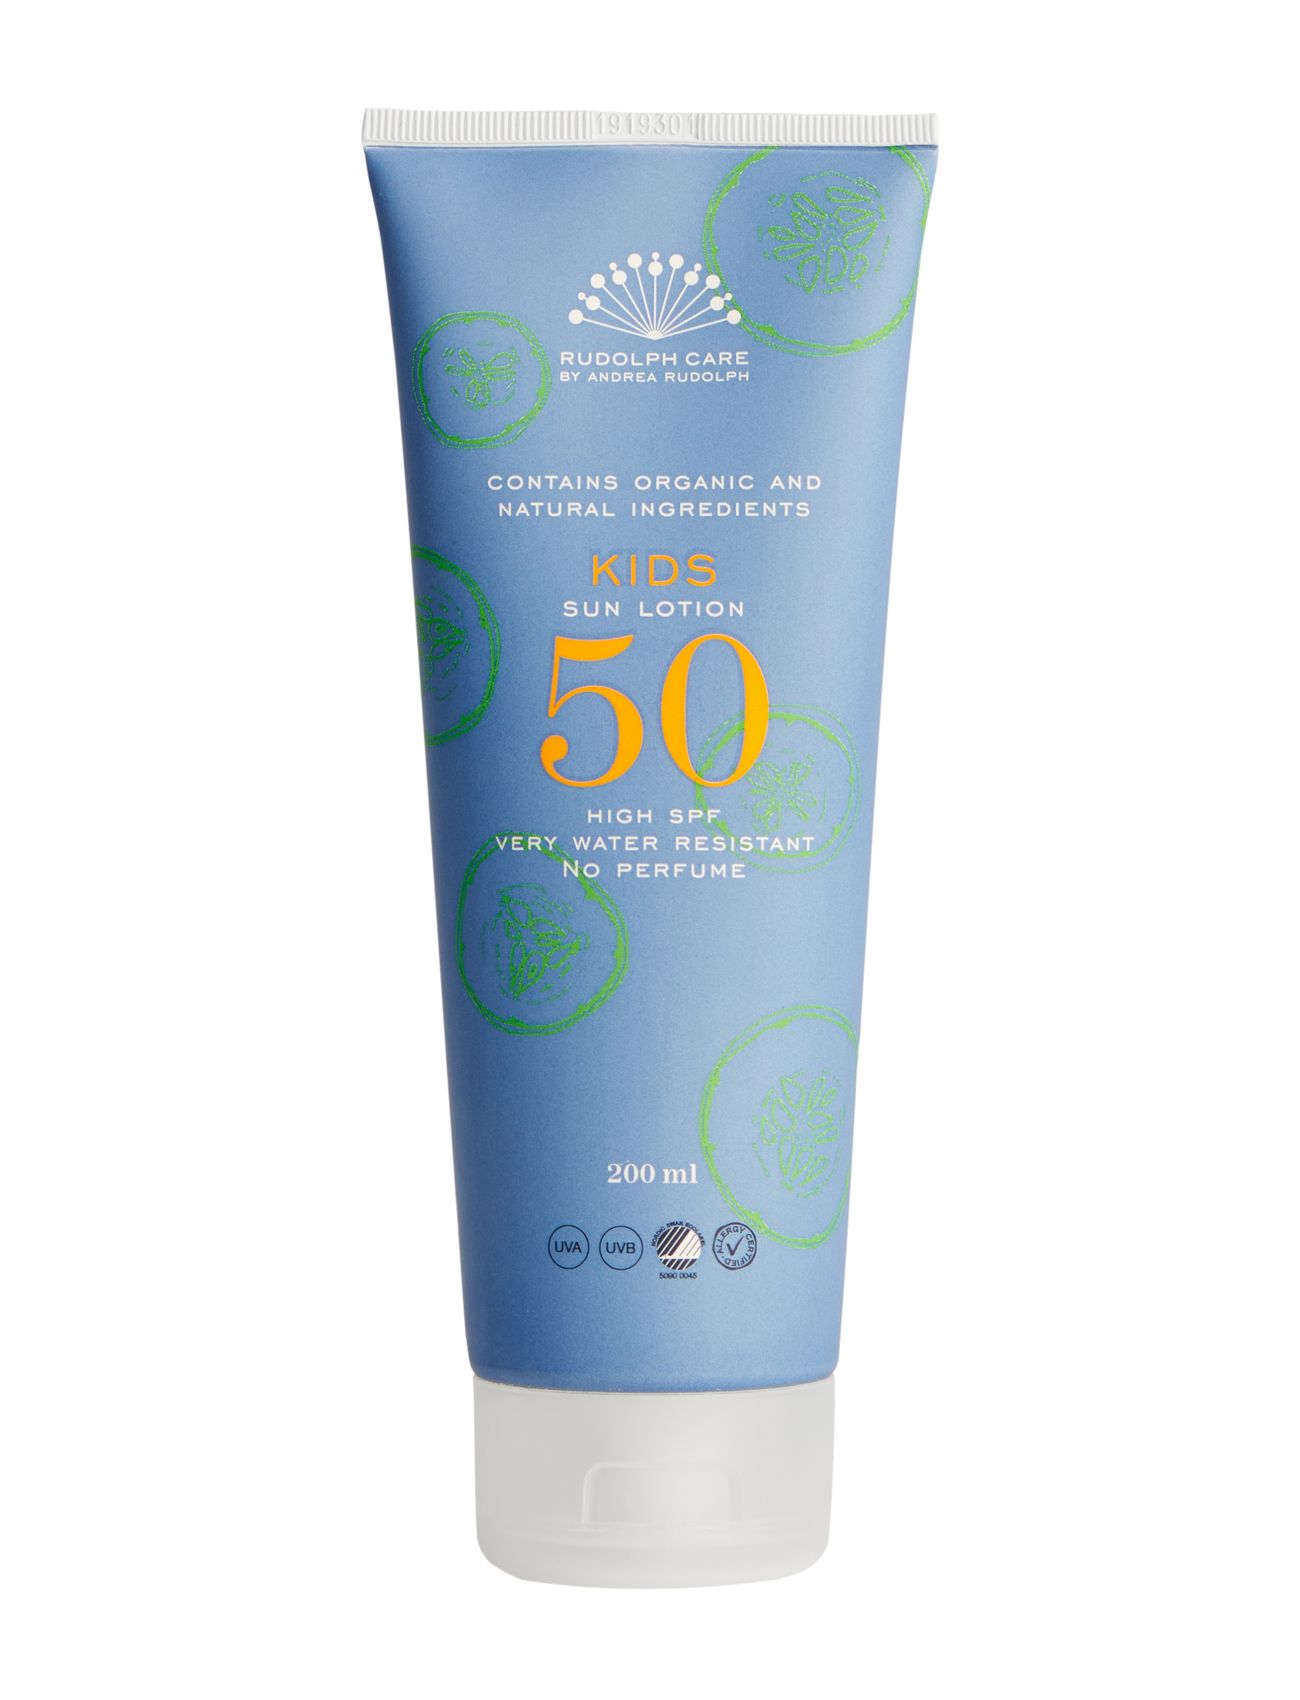 Sun Lotion Kids Spf 50 Beauty Women Skin Care Sun Products Sunscreen For Kids Nude Rudolph Care